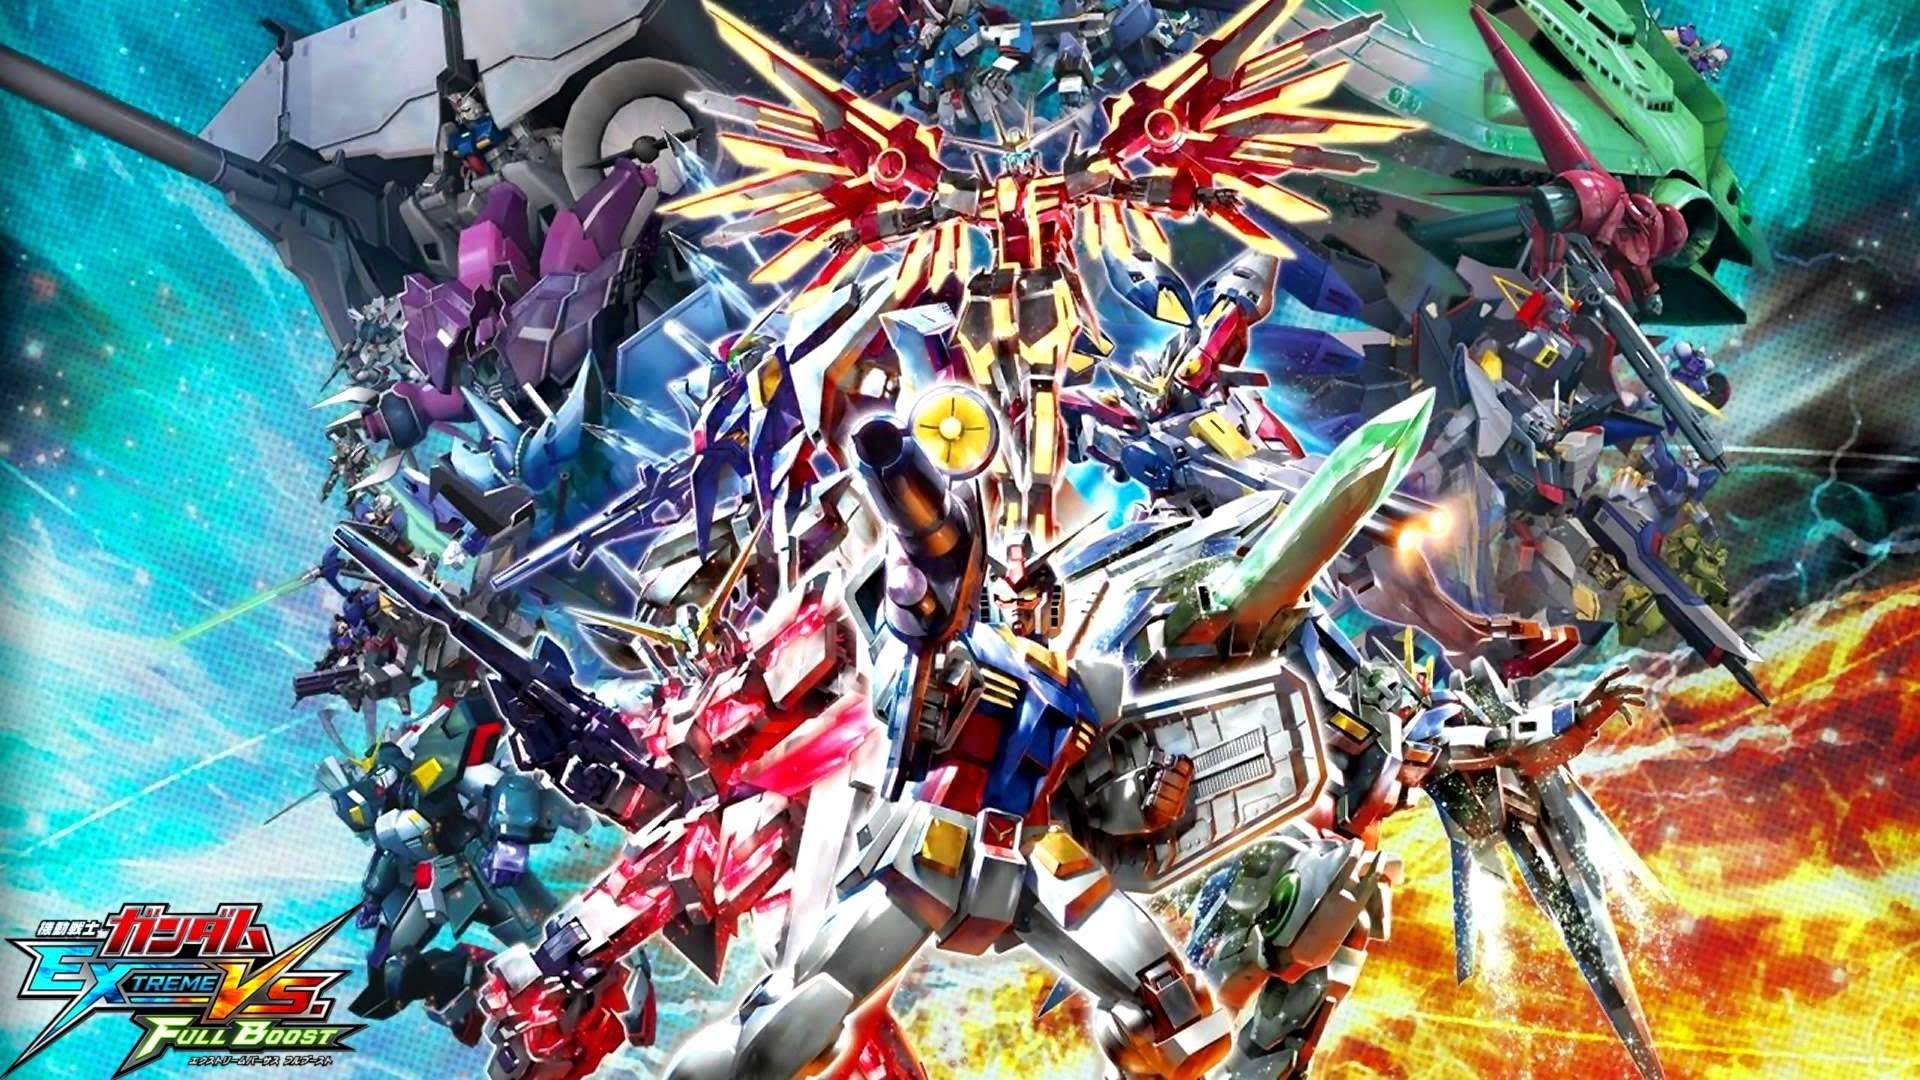 Gundam Desktop Wallpapers